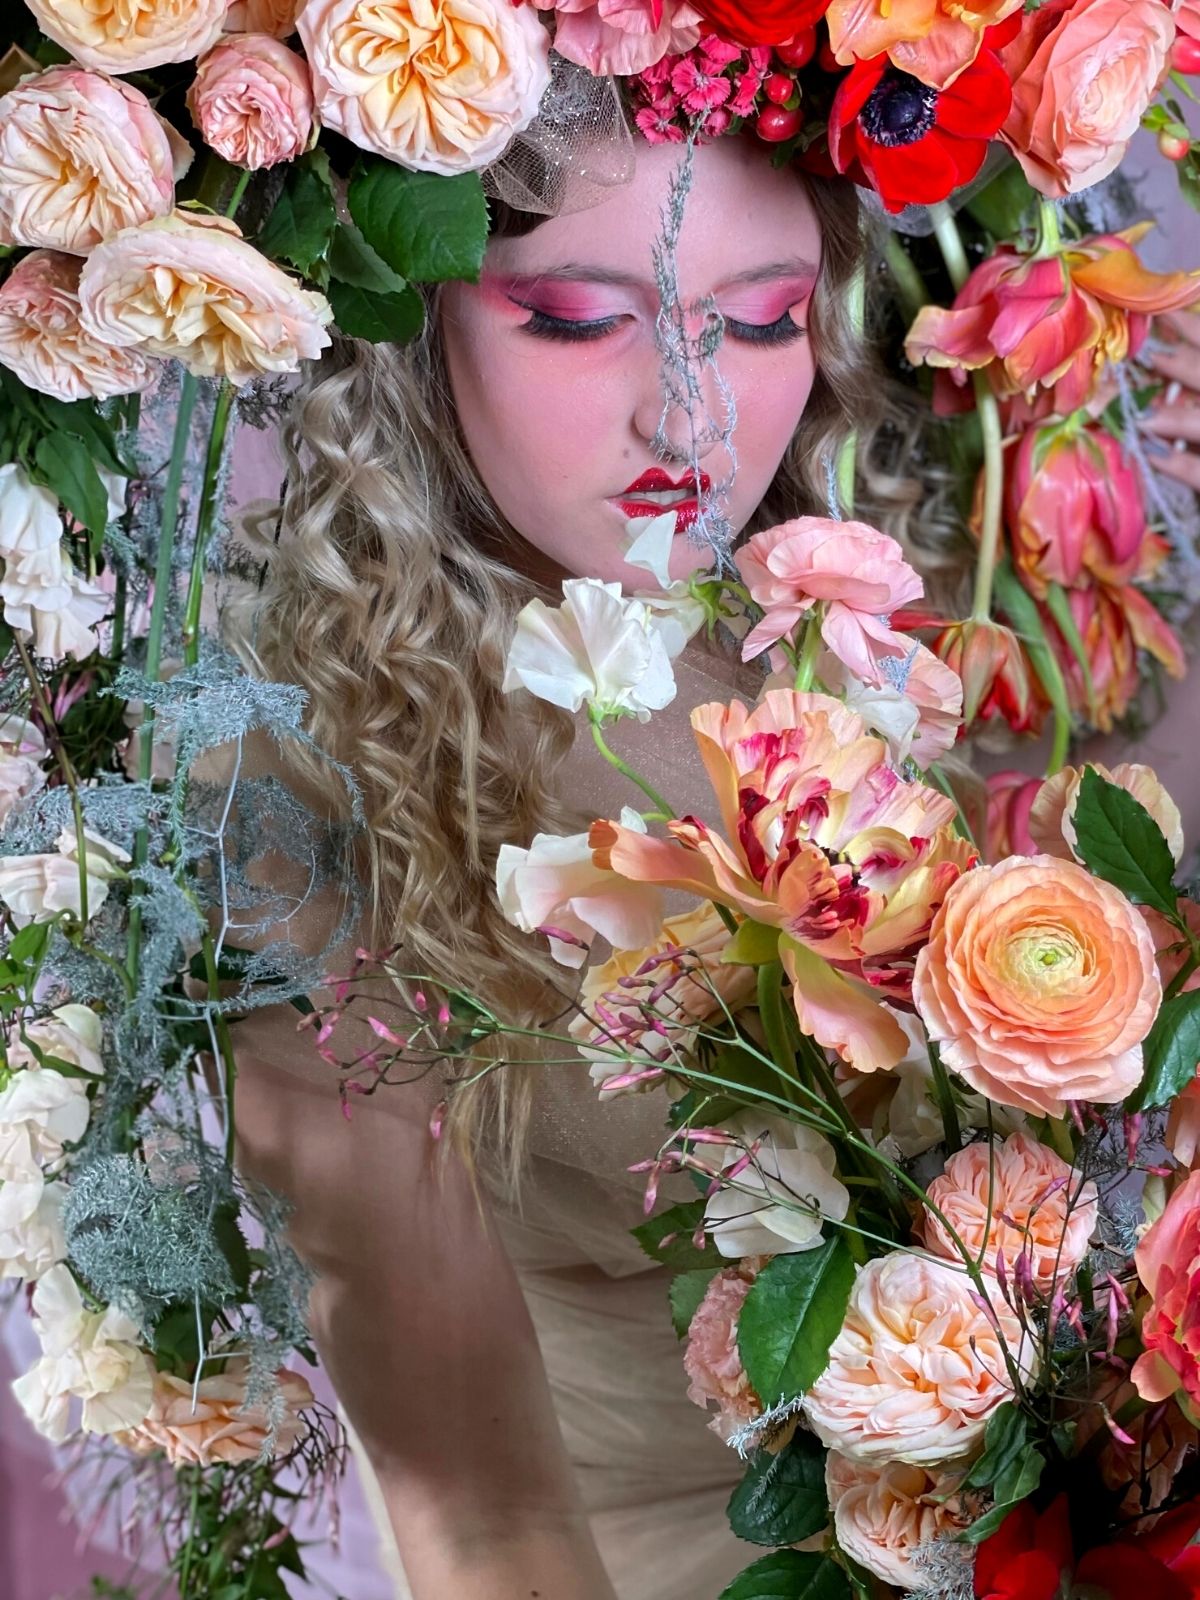 Flowers surrounding a woman - design Beth O'Reilly - on Thursd